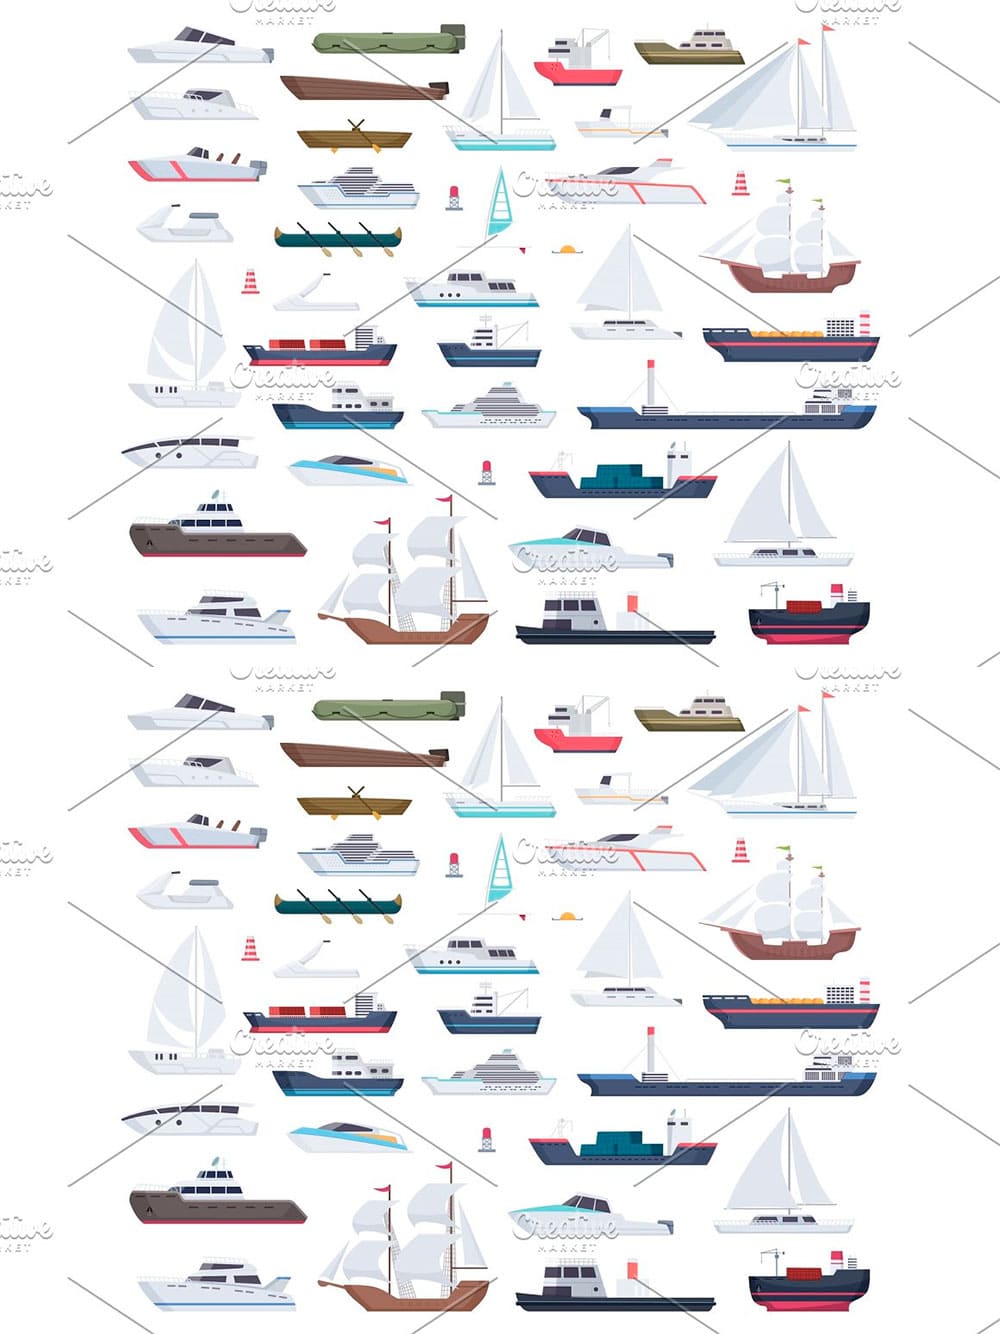 Ocean ships, picture for pinterest.